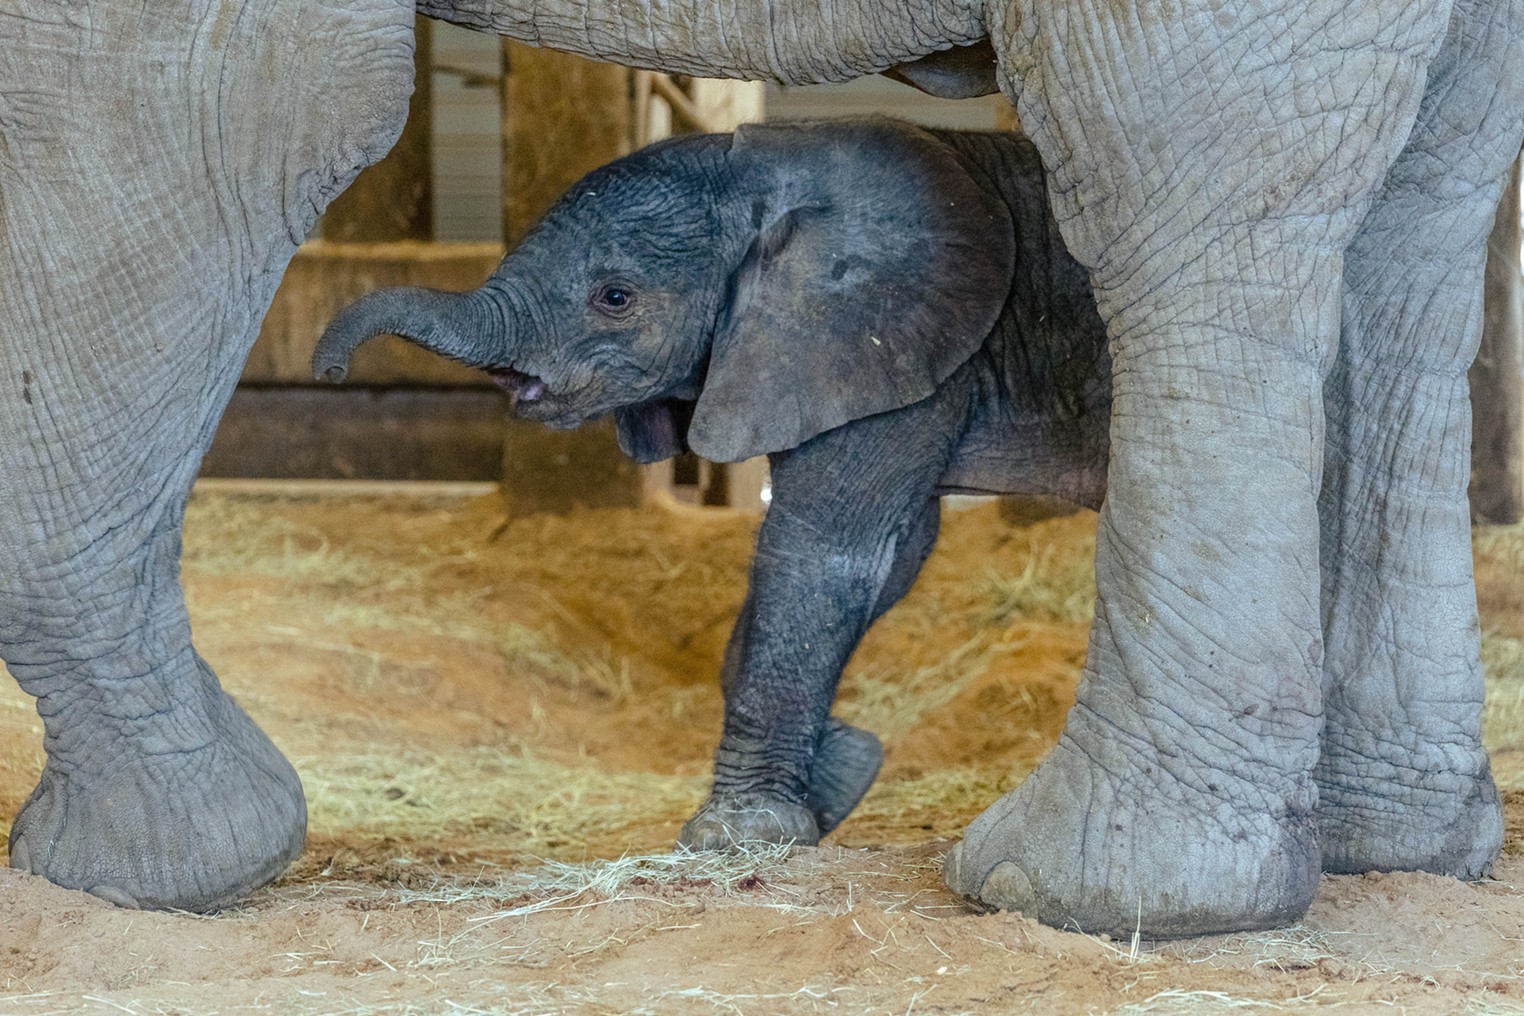 Dallas Zoo Baby Elephant Born After Series Of Burglary, Theft Of Emperor Tamarin Monkeys